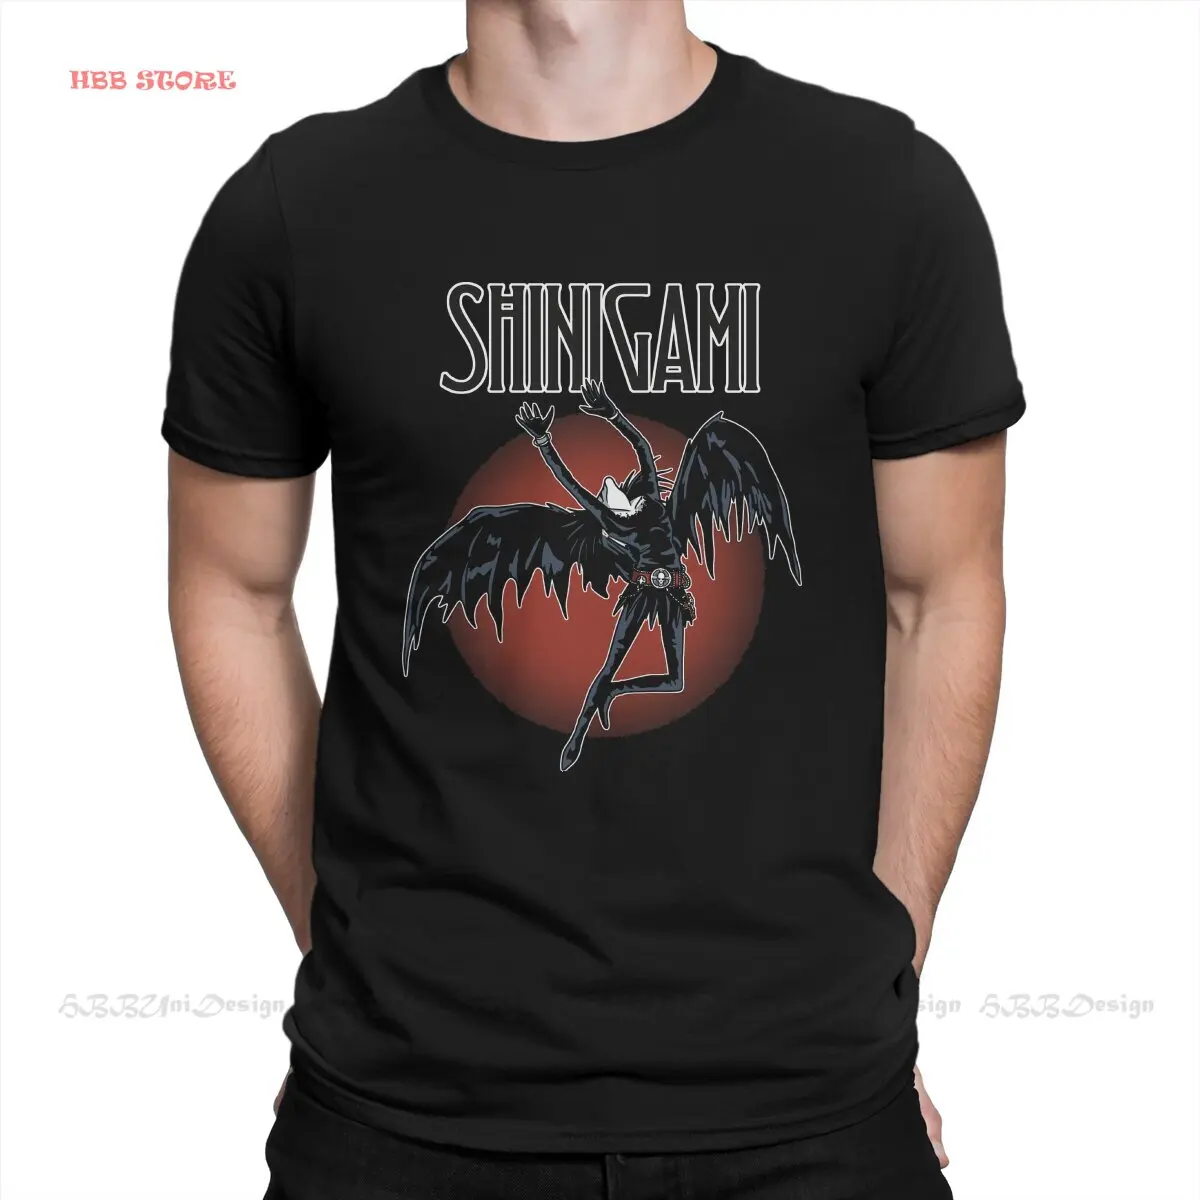 Shinigami Death Note TShirt Monkey Island Game LeChuck Elaine Guybrush Top Quality Creative Gift Idea  T Shirt Stuff Hot Sale